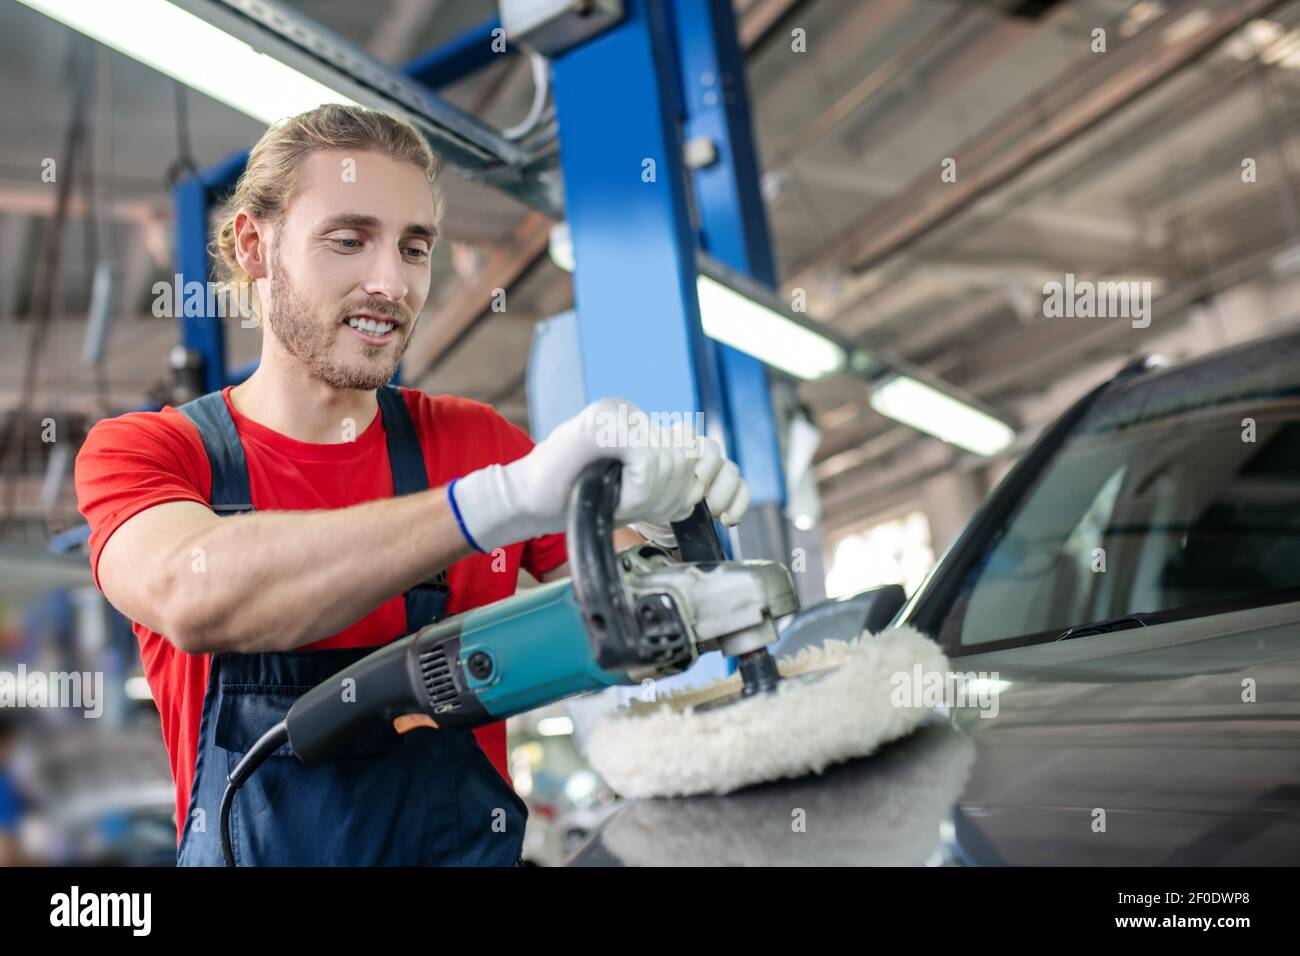 Man polishing car using polishing machine Stock Photo